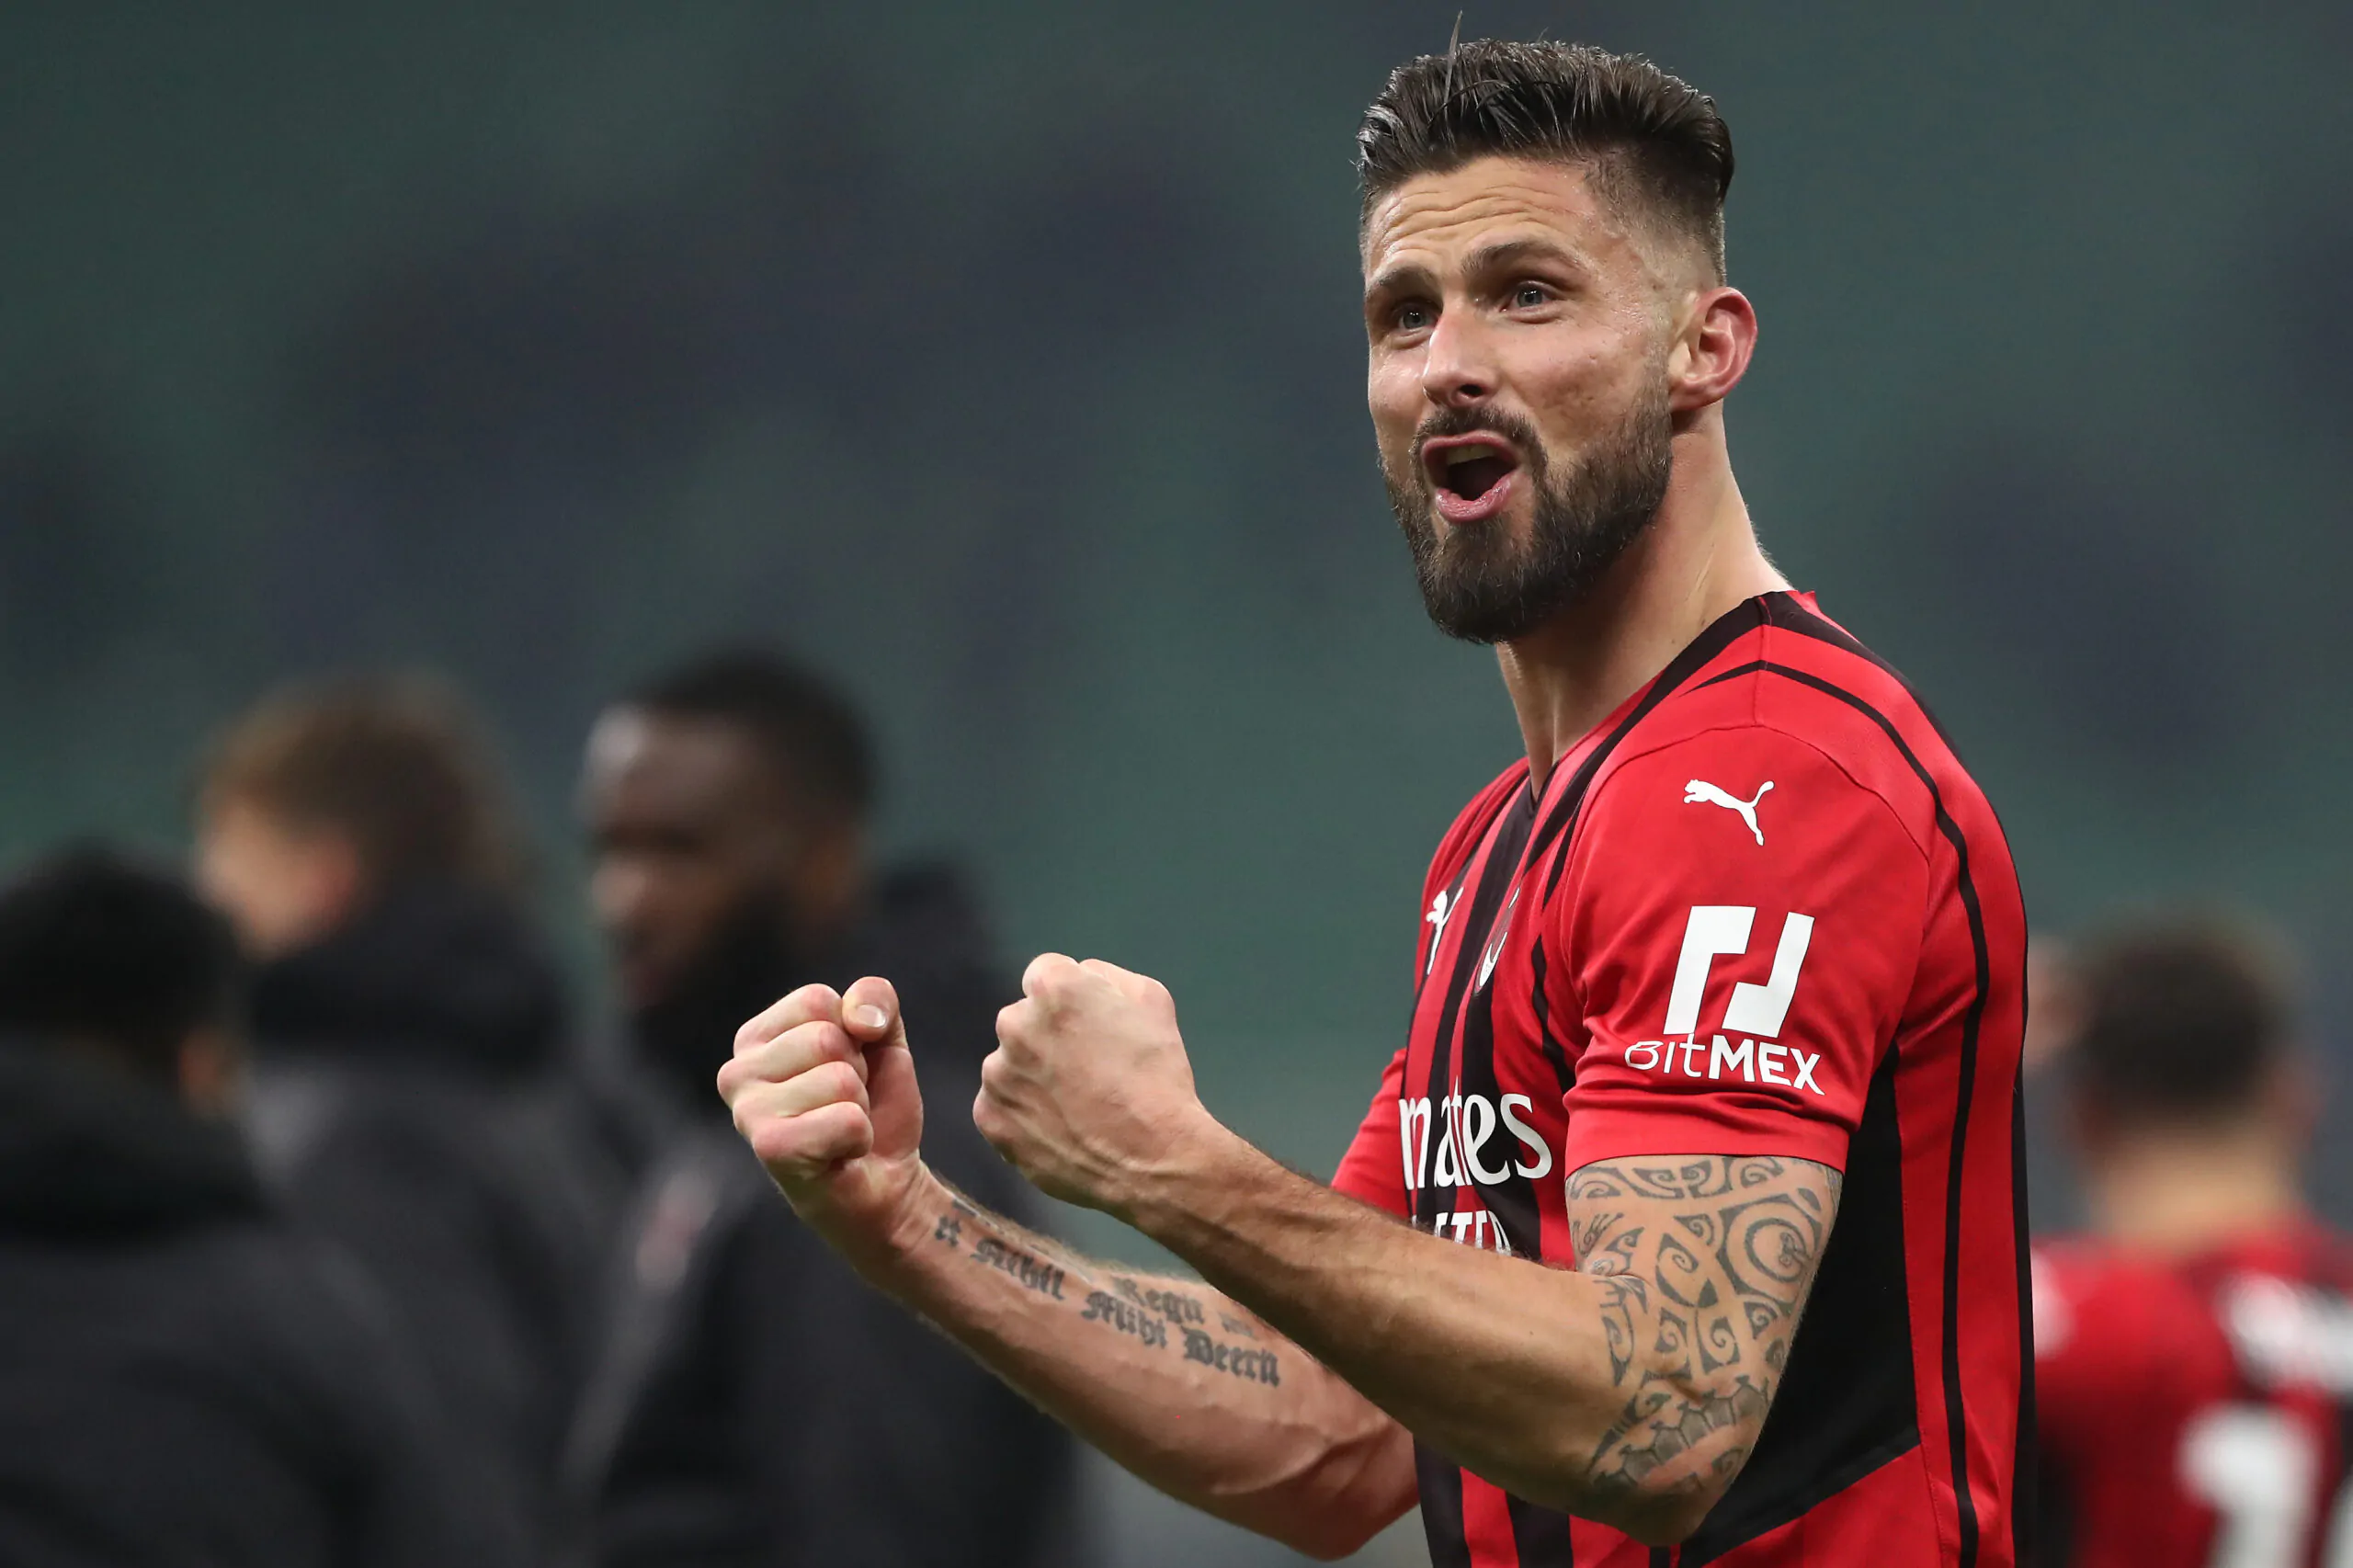 Allenamento Milan, buone notizie su Giroud e Romagnoli